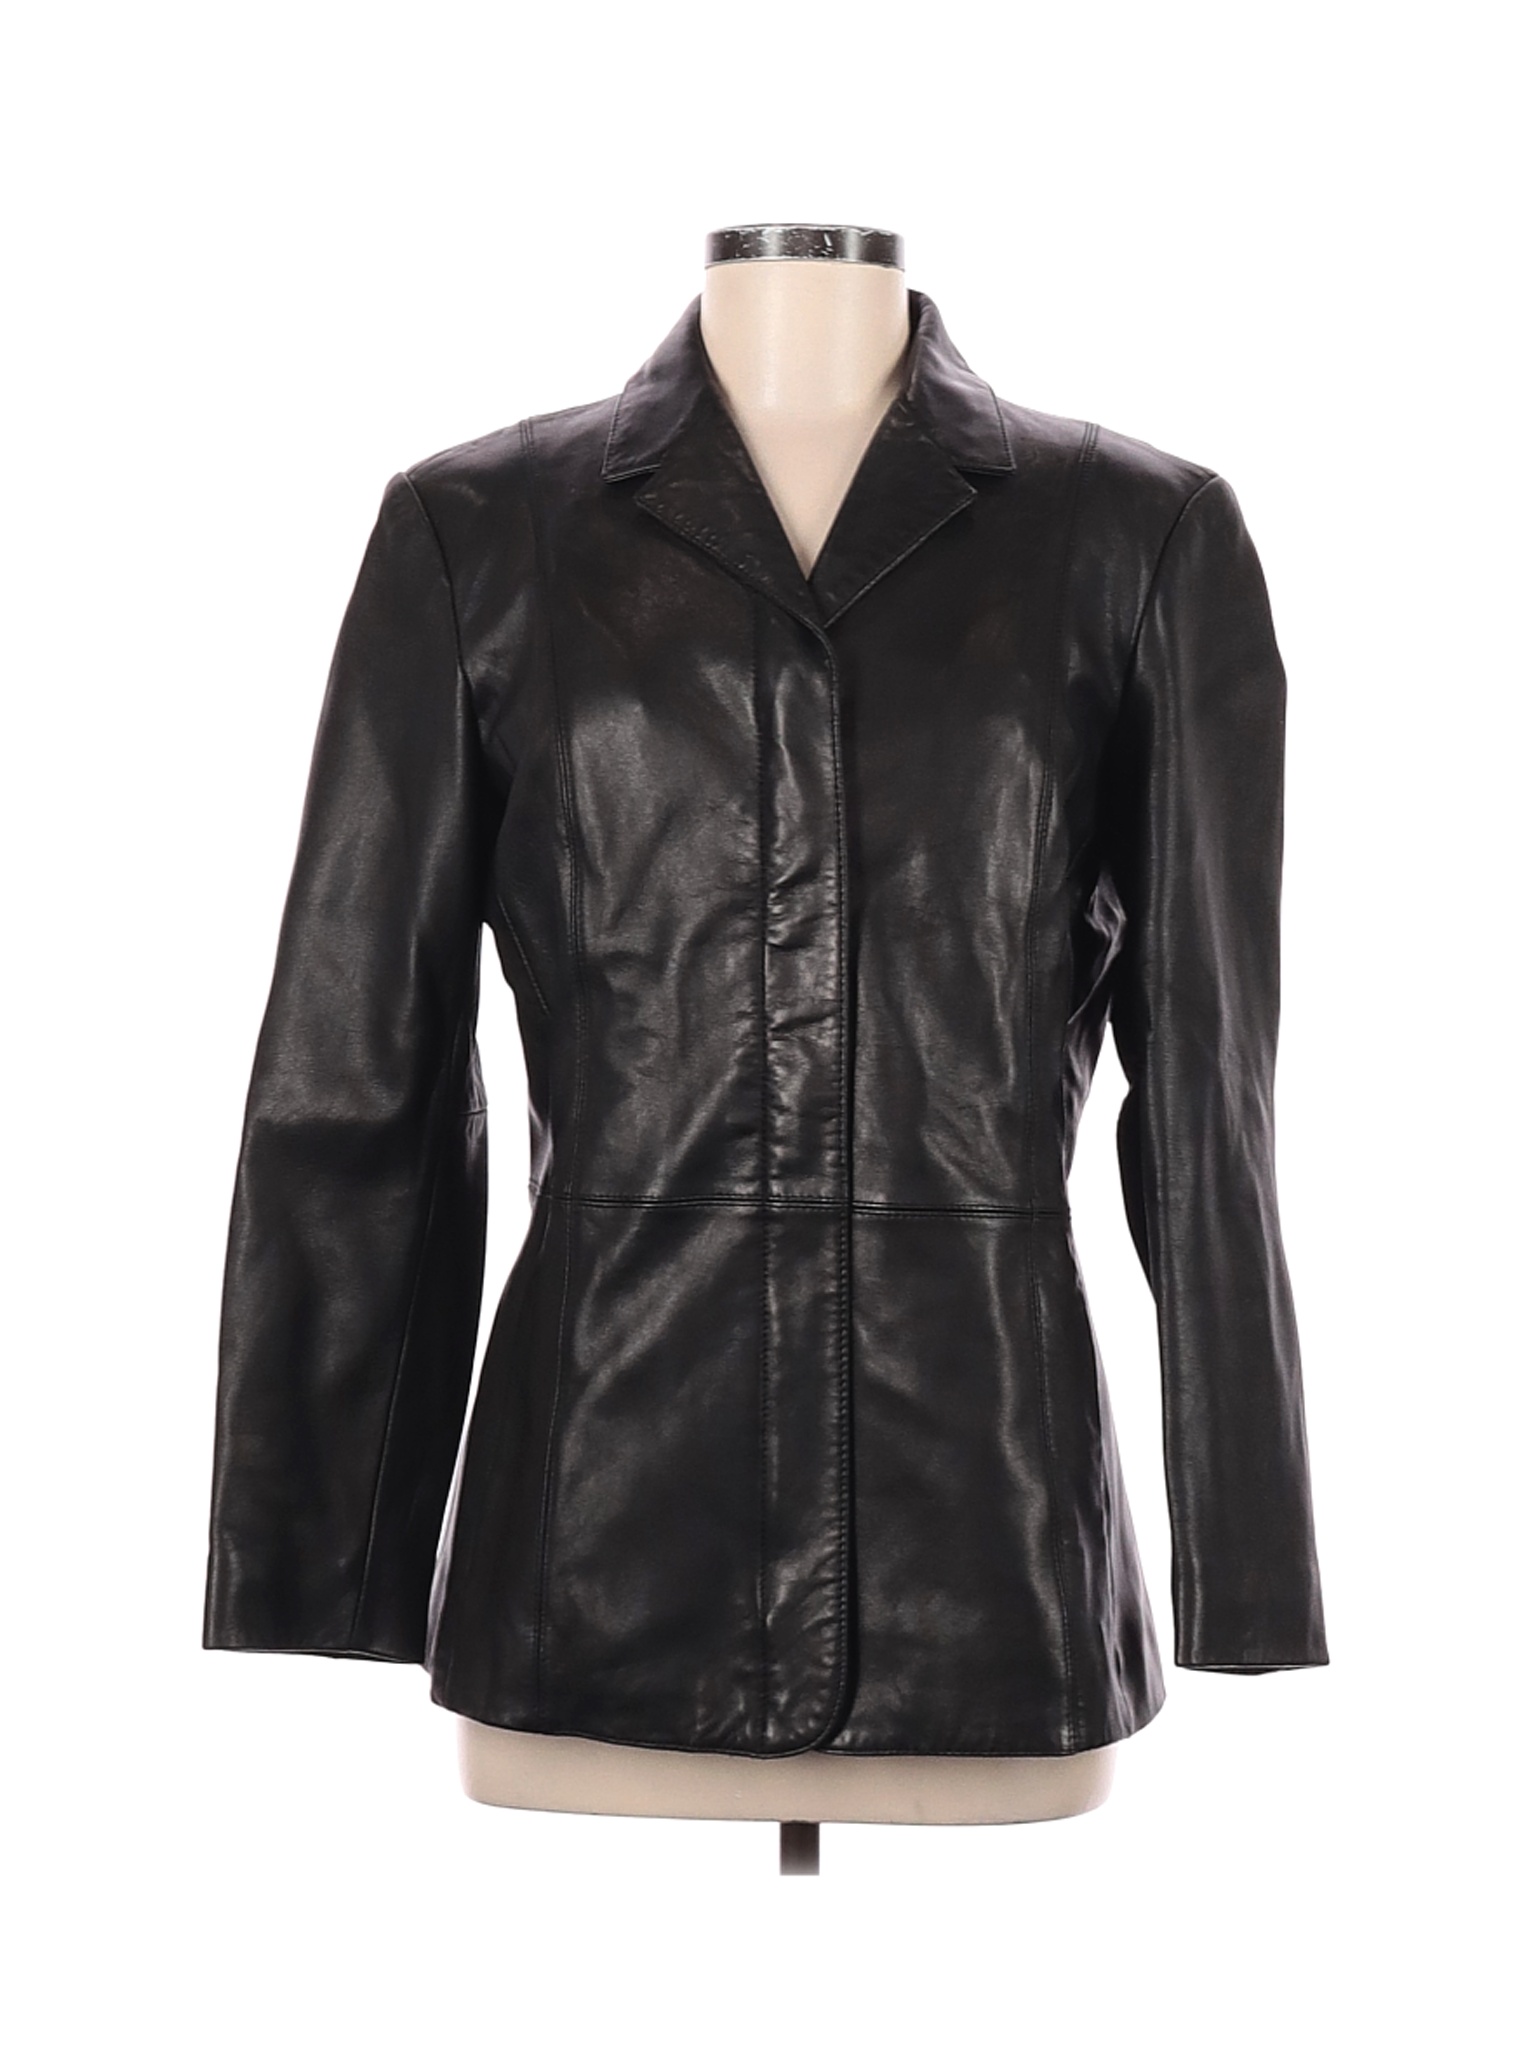 Preston & York Women Black Leather Jacket 8 | eBay